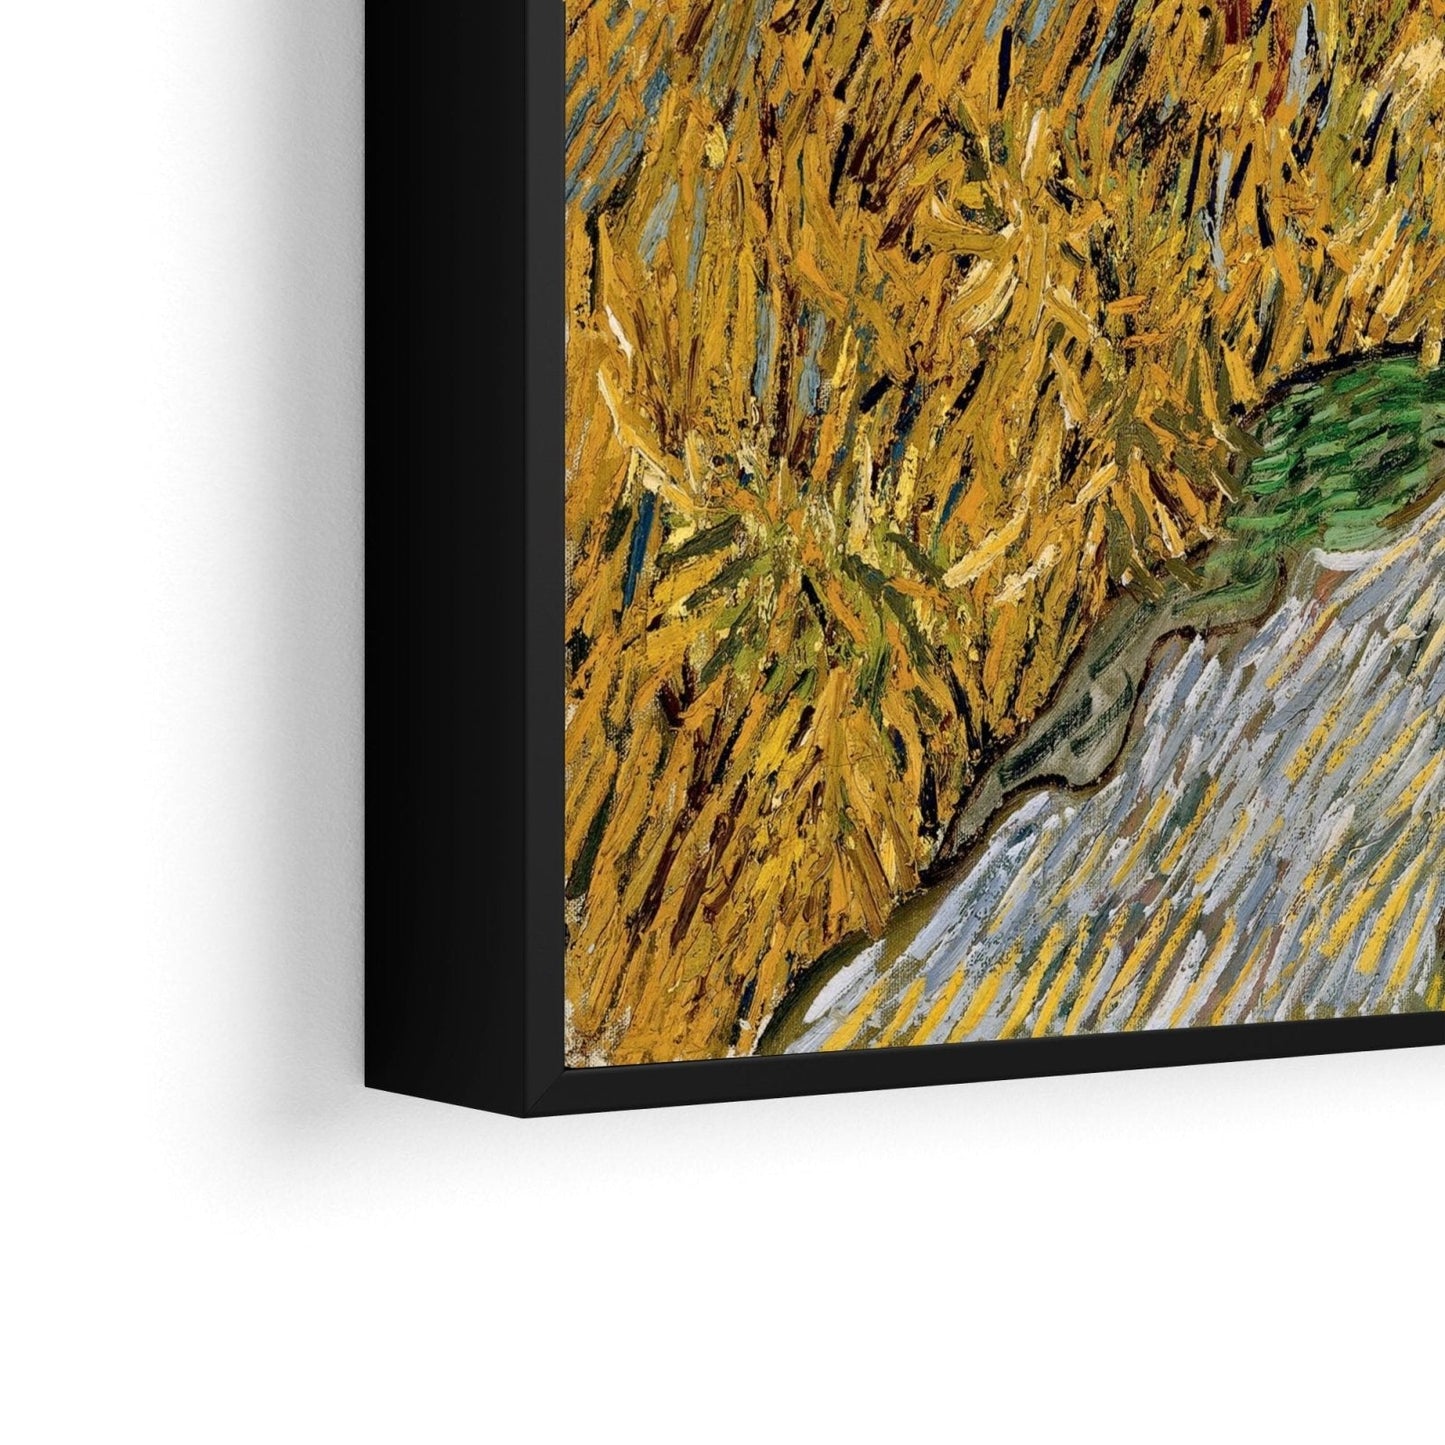 Tie sypressin ja tähden kanssa, Vincent Van Gogh